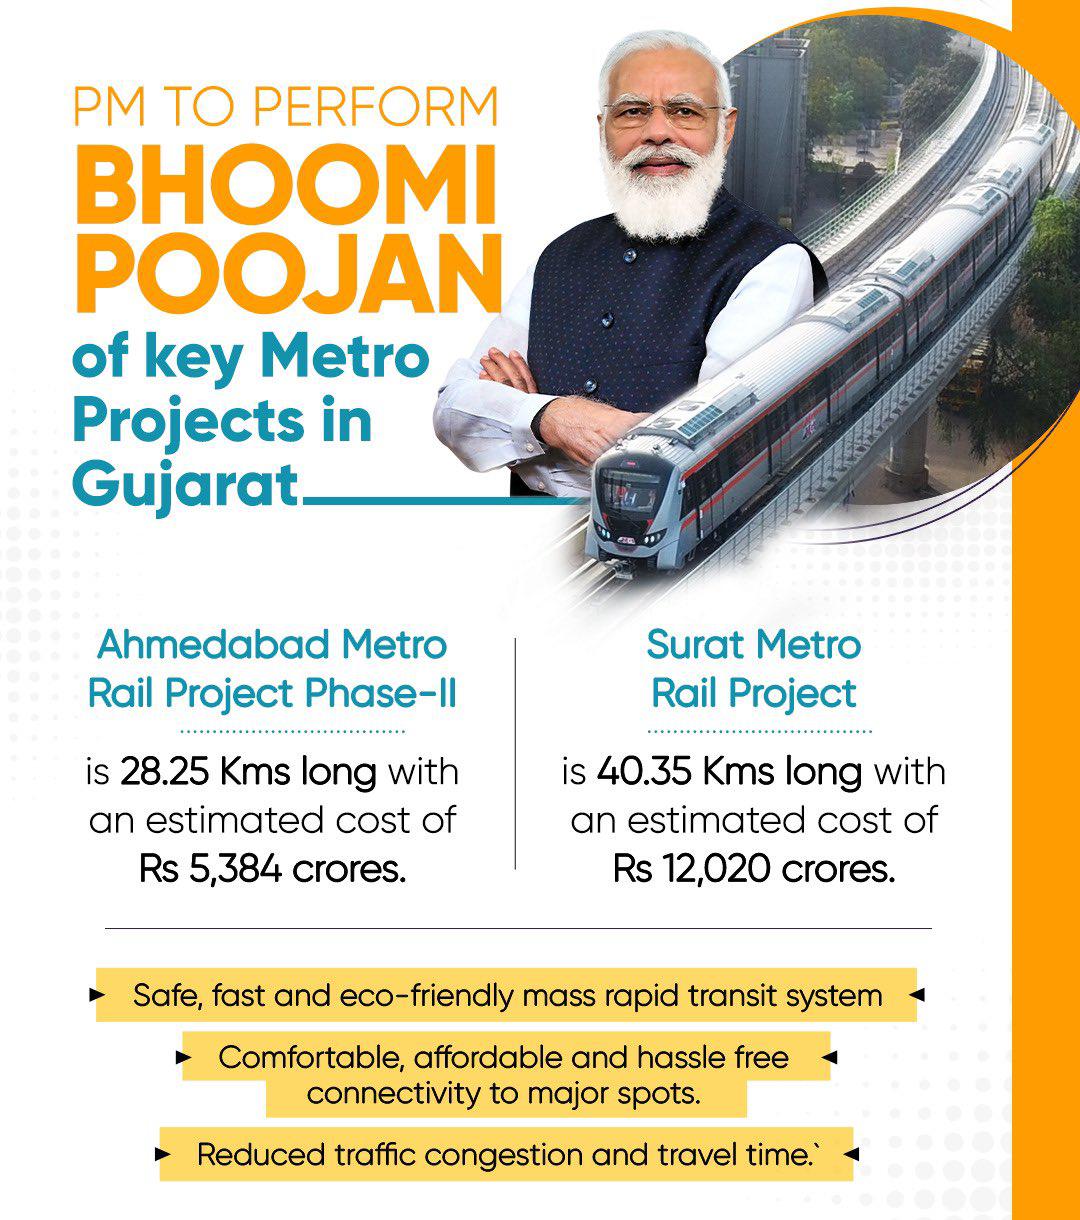 Surat Metro Rail Project, Gujarat, India THANK YOU 